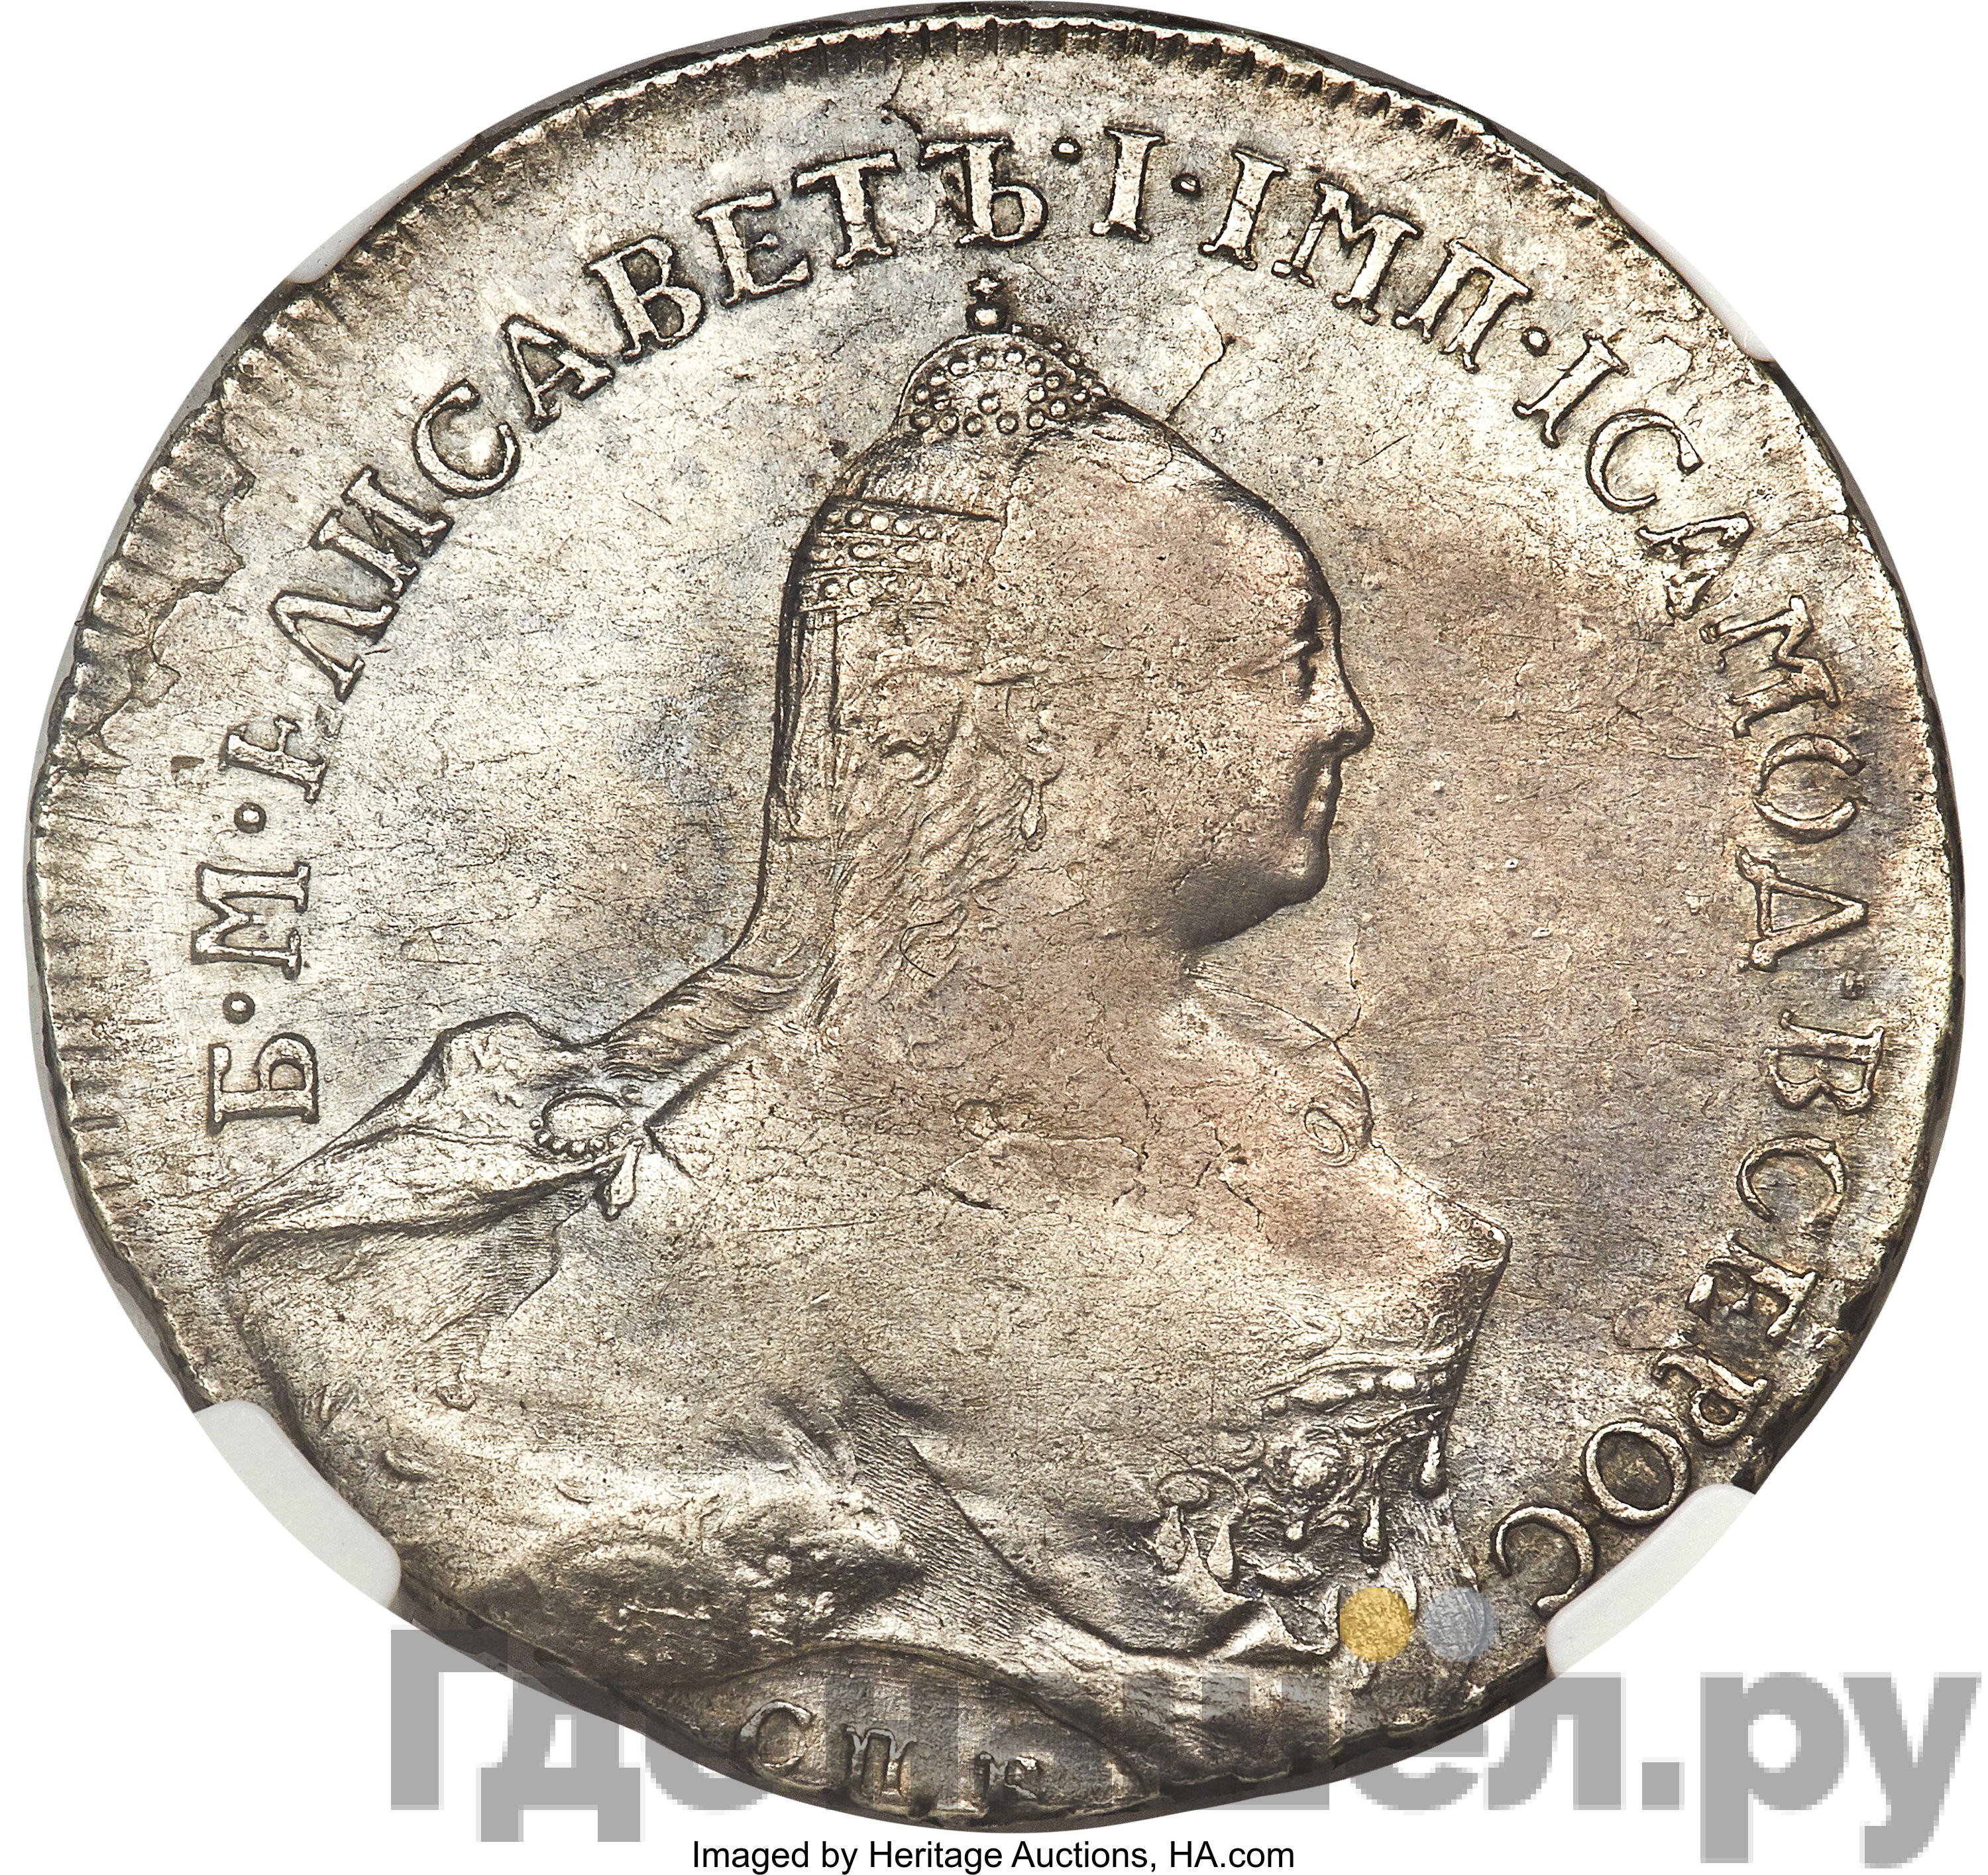 1 рубль 1761 года